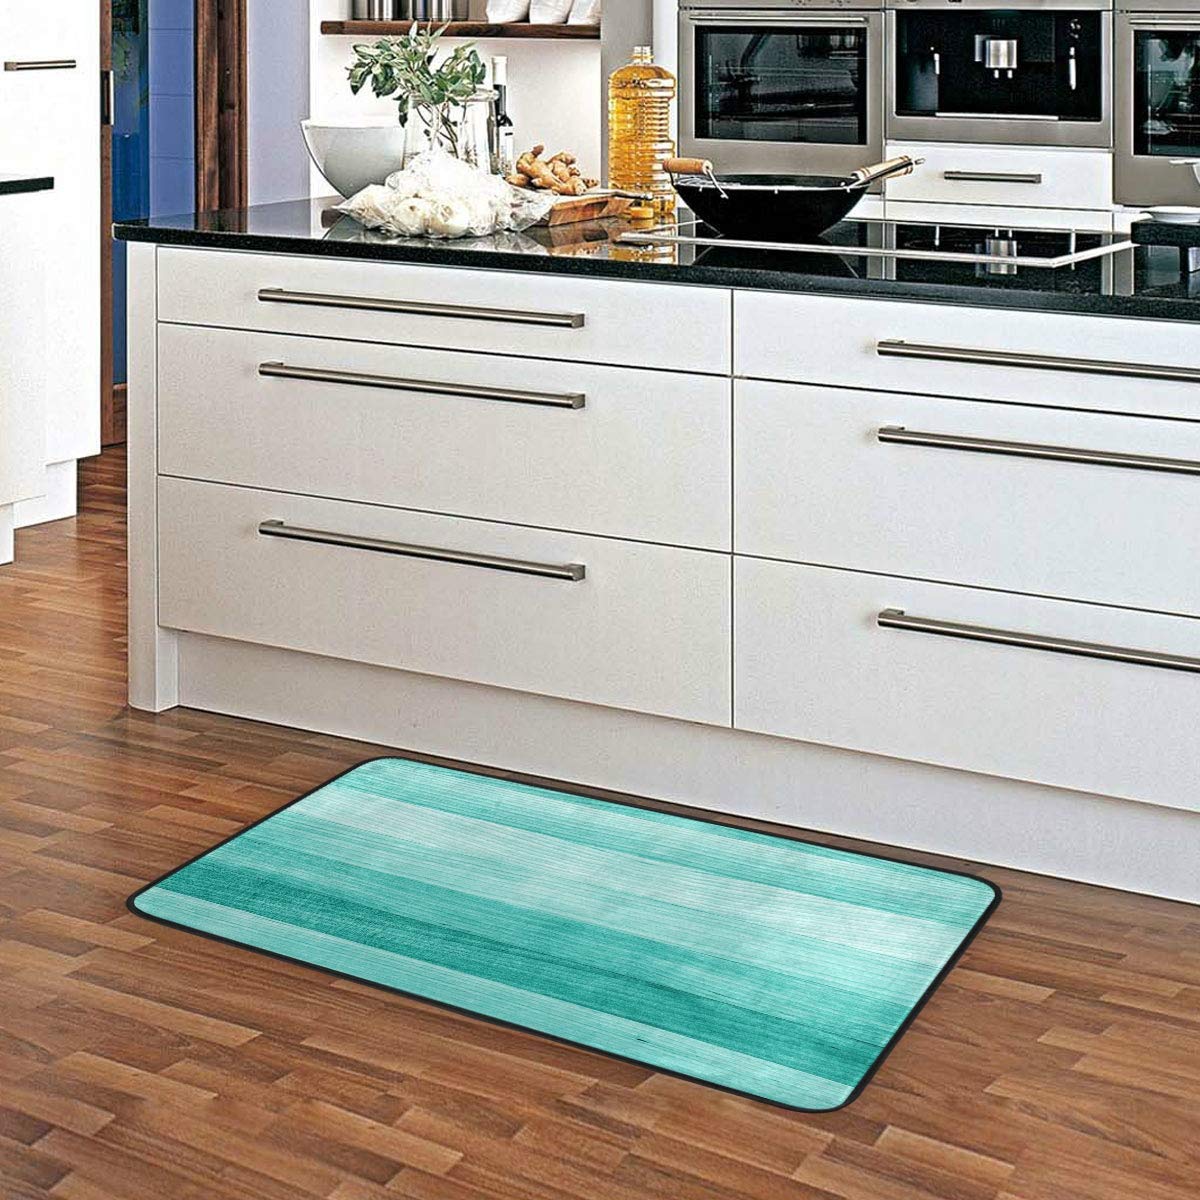 Kitchen Rugs Teal Turquoise Green Wood Design Non-Slip Soft Kitchen Mats Bath Rug Runner Doormats Carpet for Home Decor, 39" X 20"